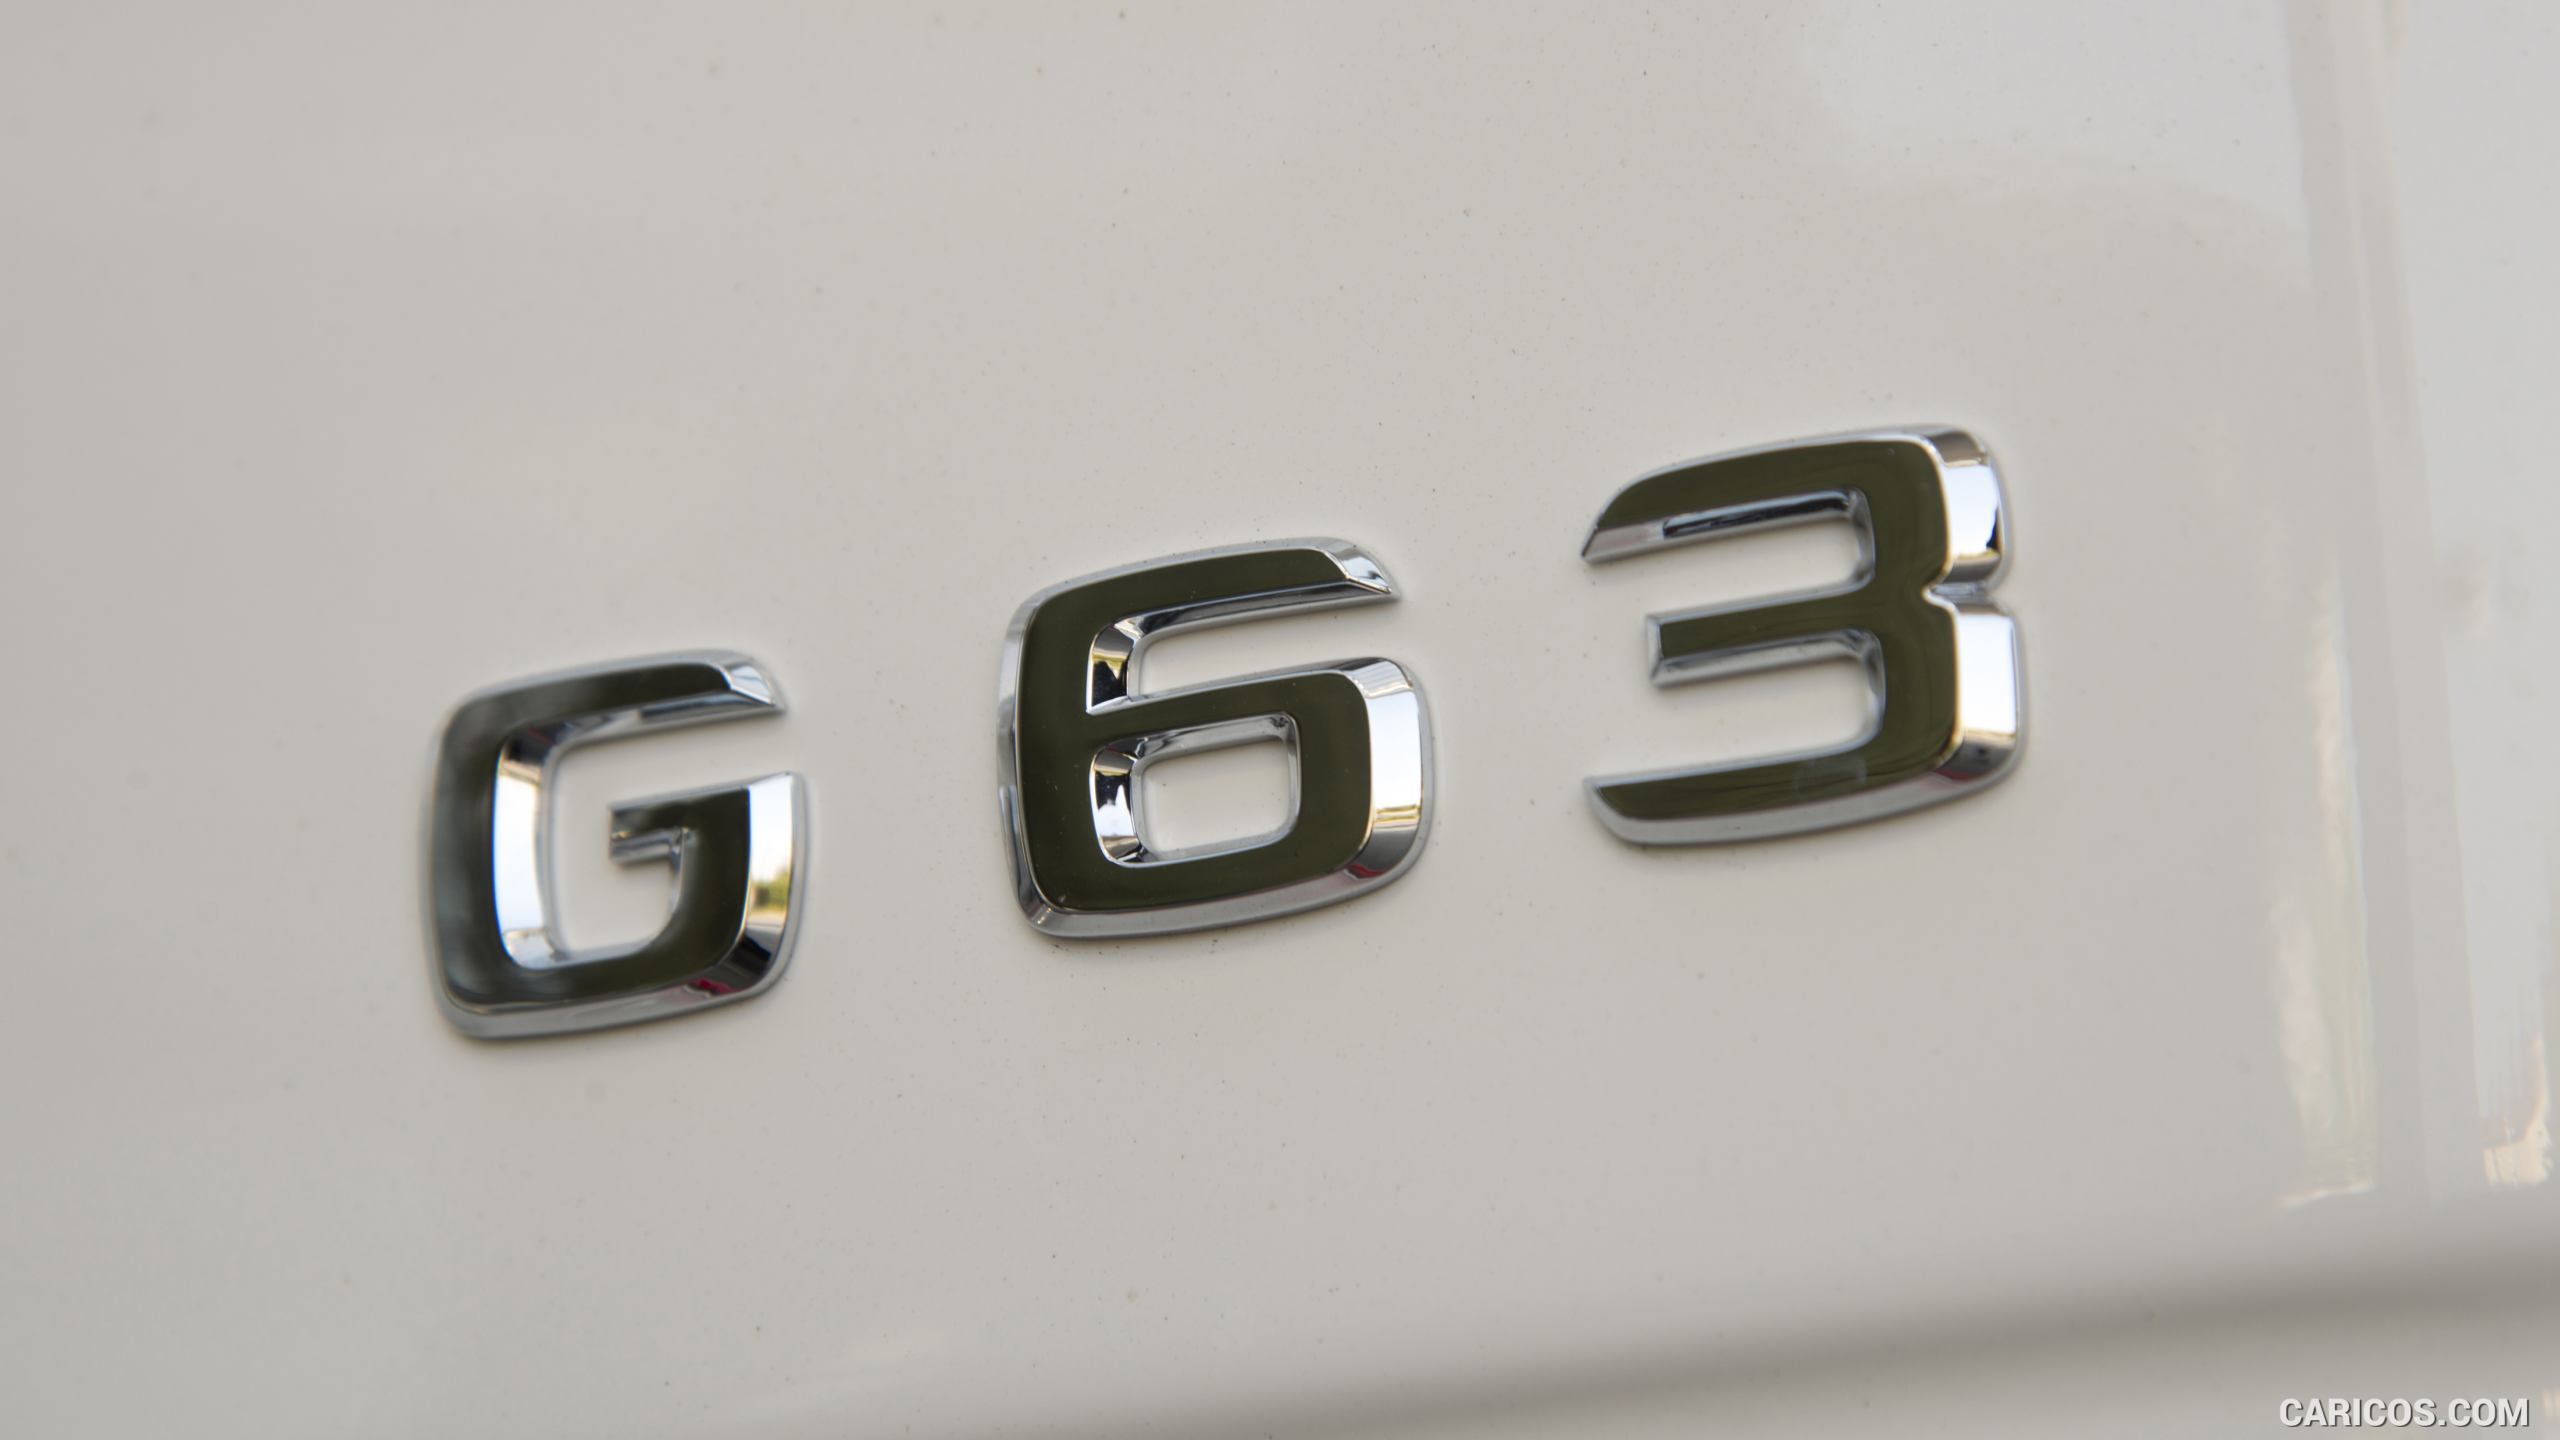 2016 Mercedes-AMG G63 AMG EDITION 463 in Polarwhite - Badge, #42 of 48